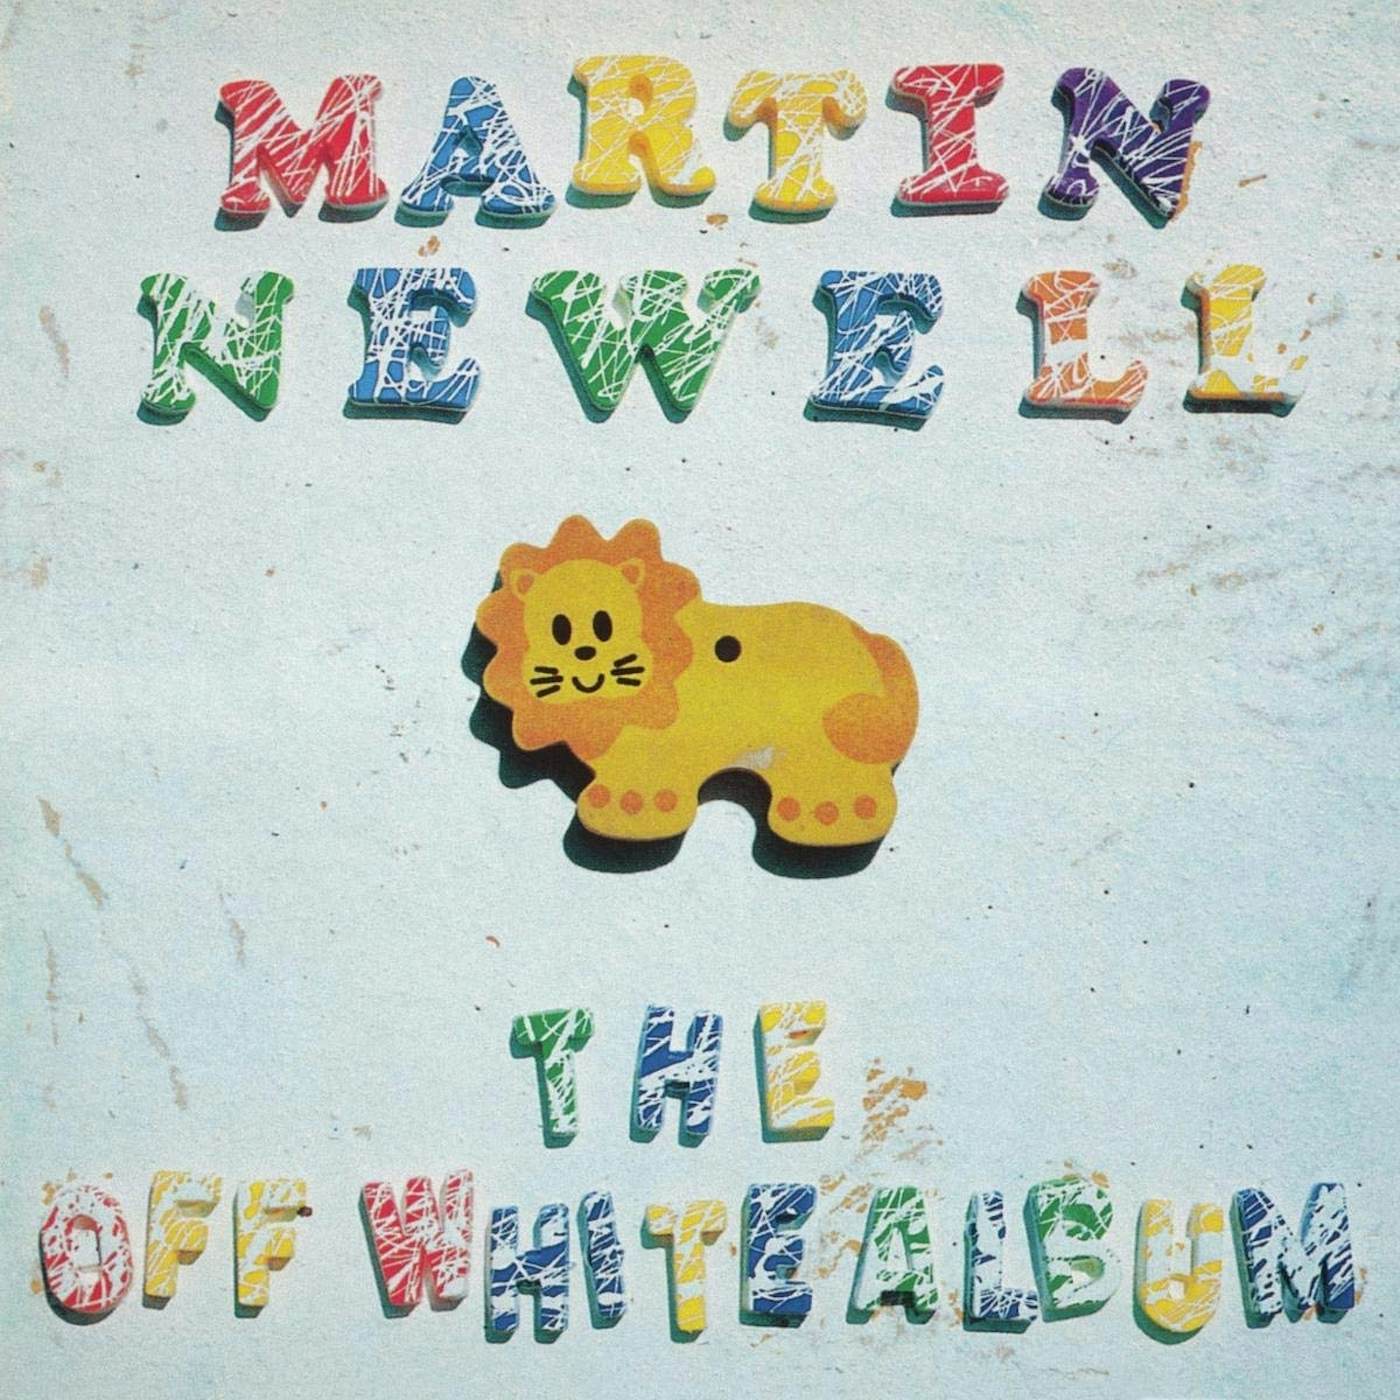 Martin Newell OFF WHITE ALBUM Vinyl Record